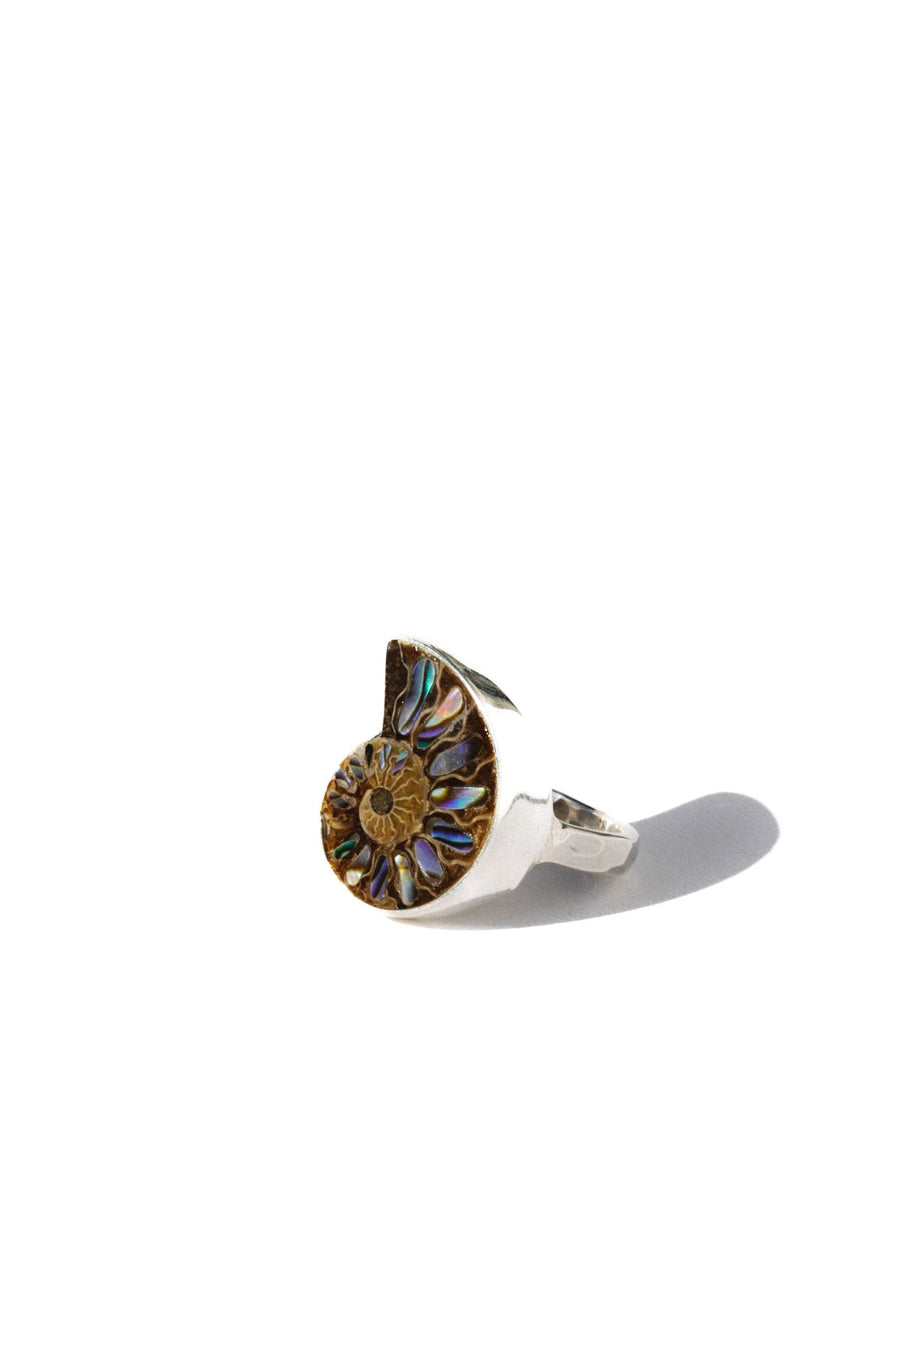 Starborn Creations Jewelry Sacred Union Ammonite & Abalone Ring